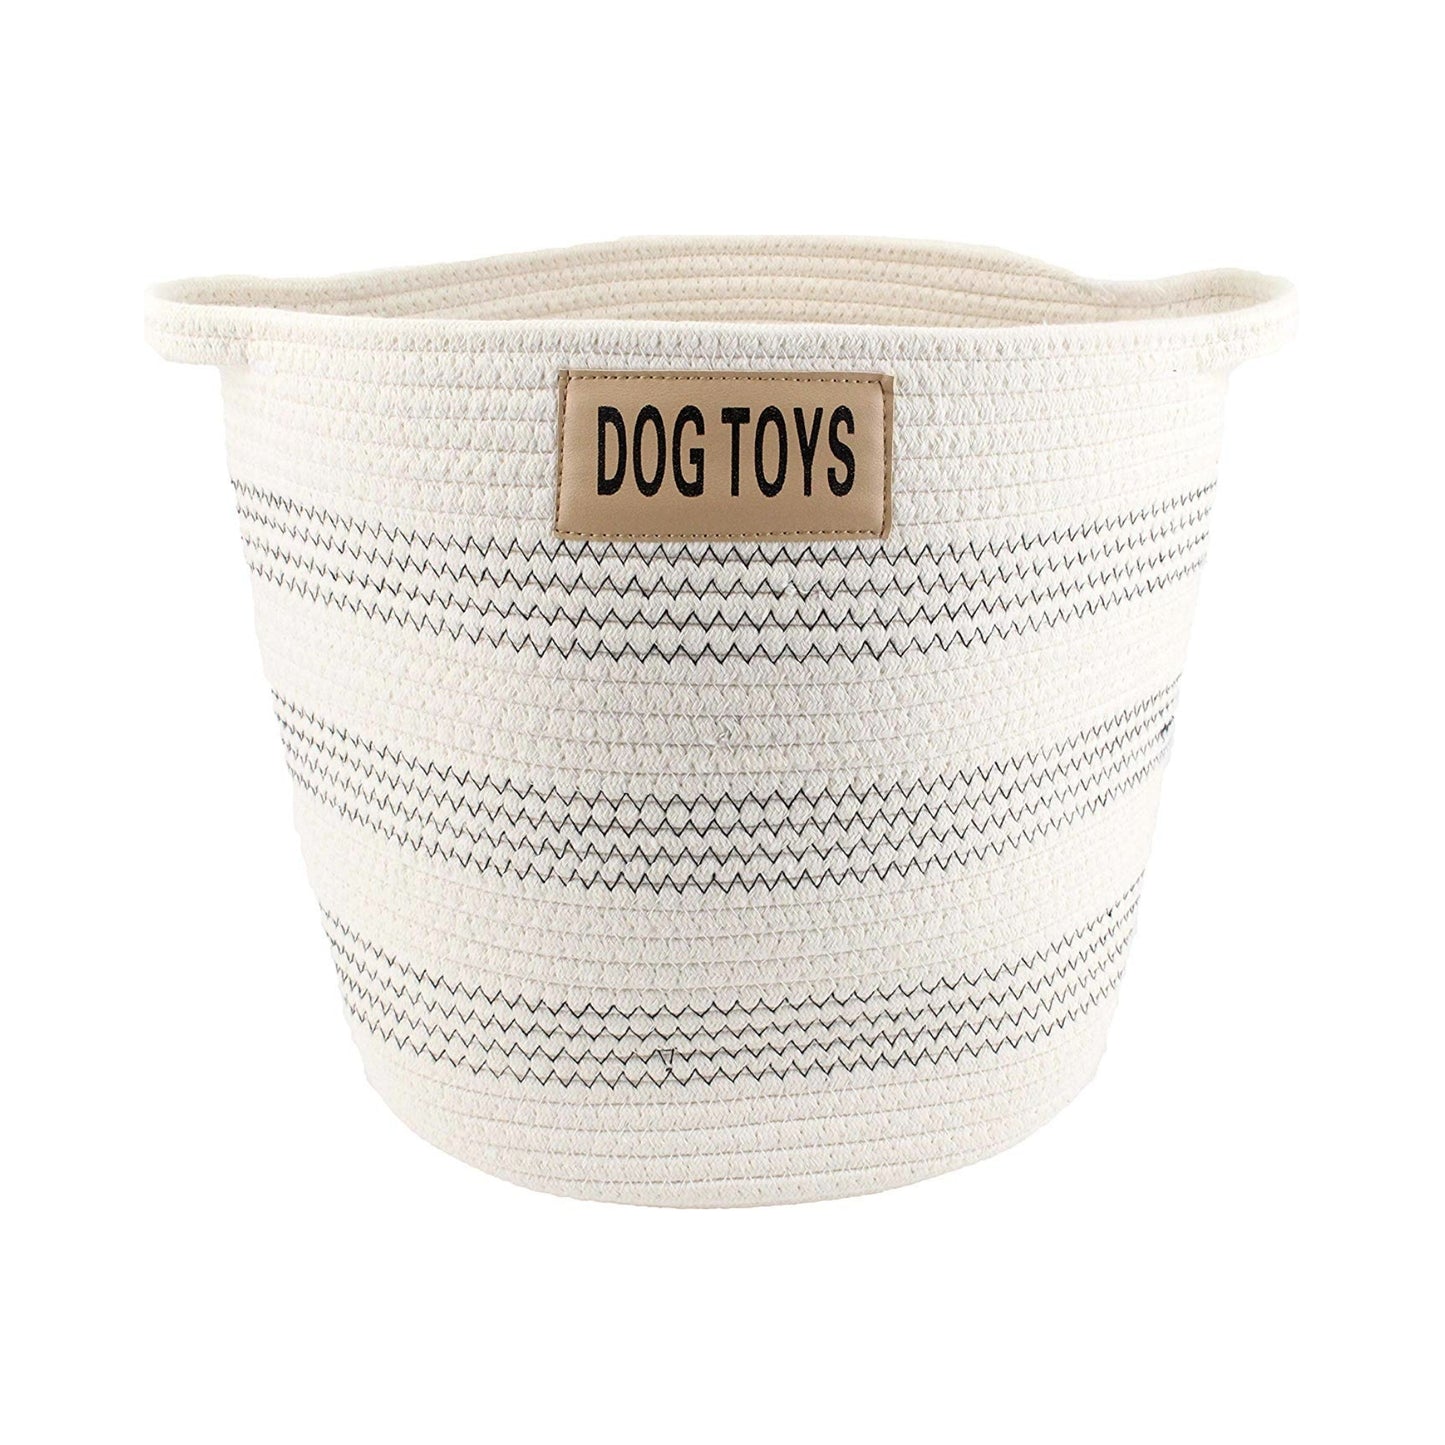 Midlee Dog Toy Rope Cotton Basket